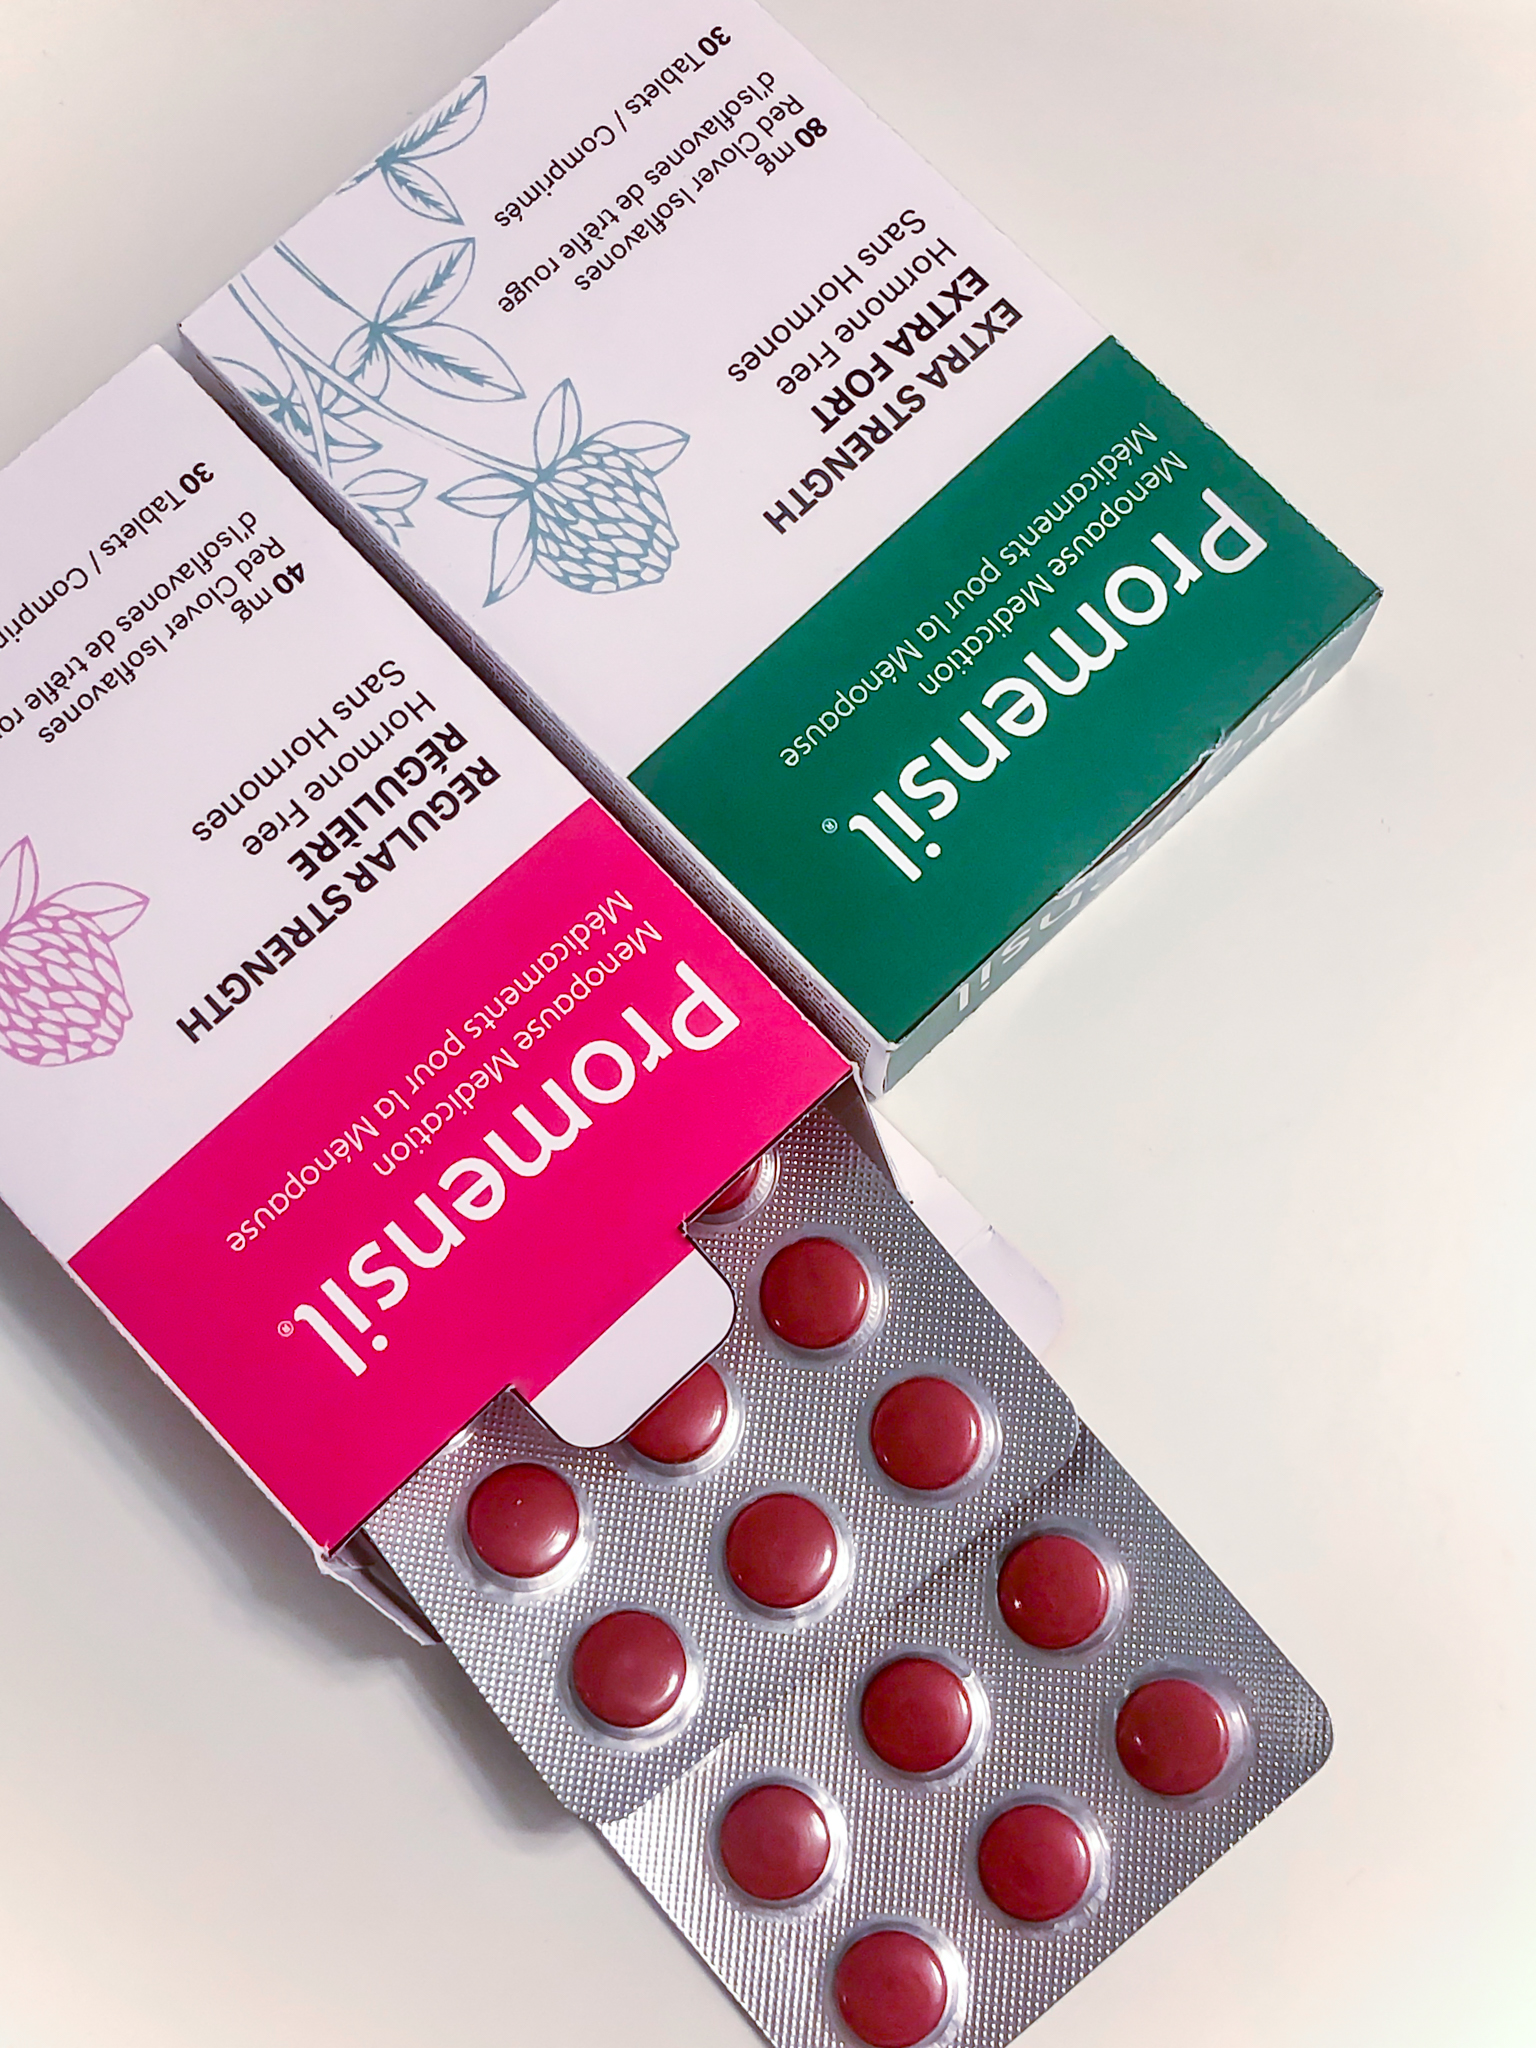 Promensil Menopause Medication (Packaging Redesign) opened